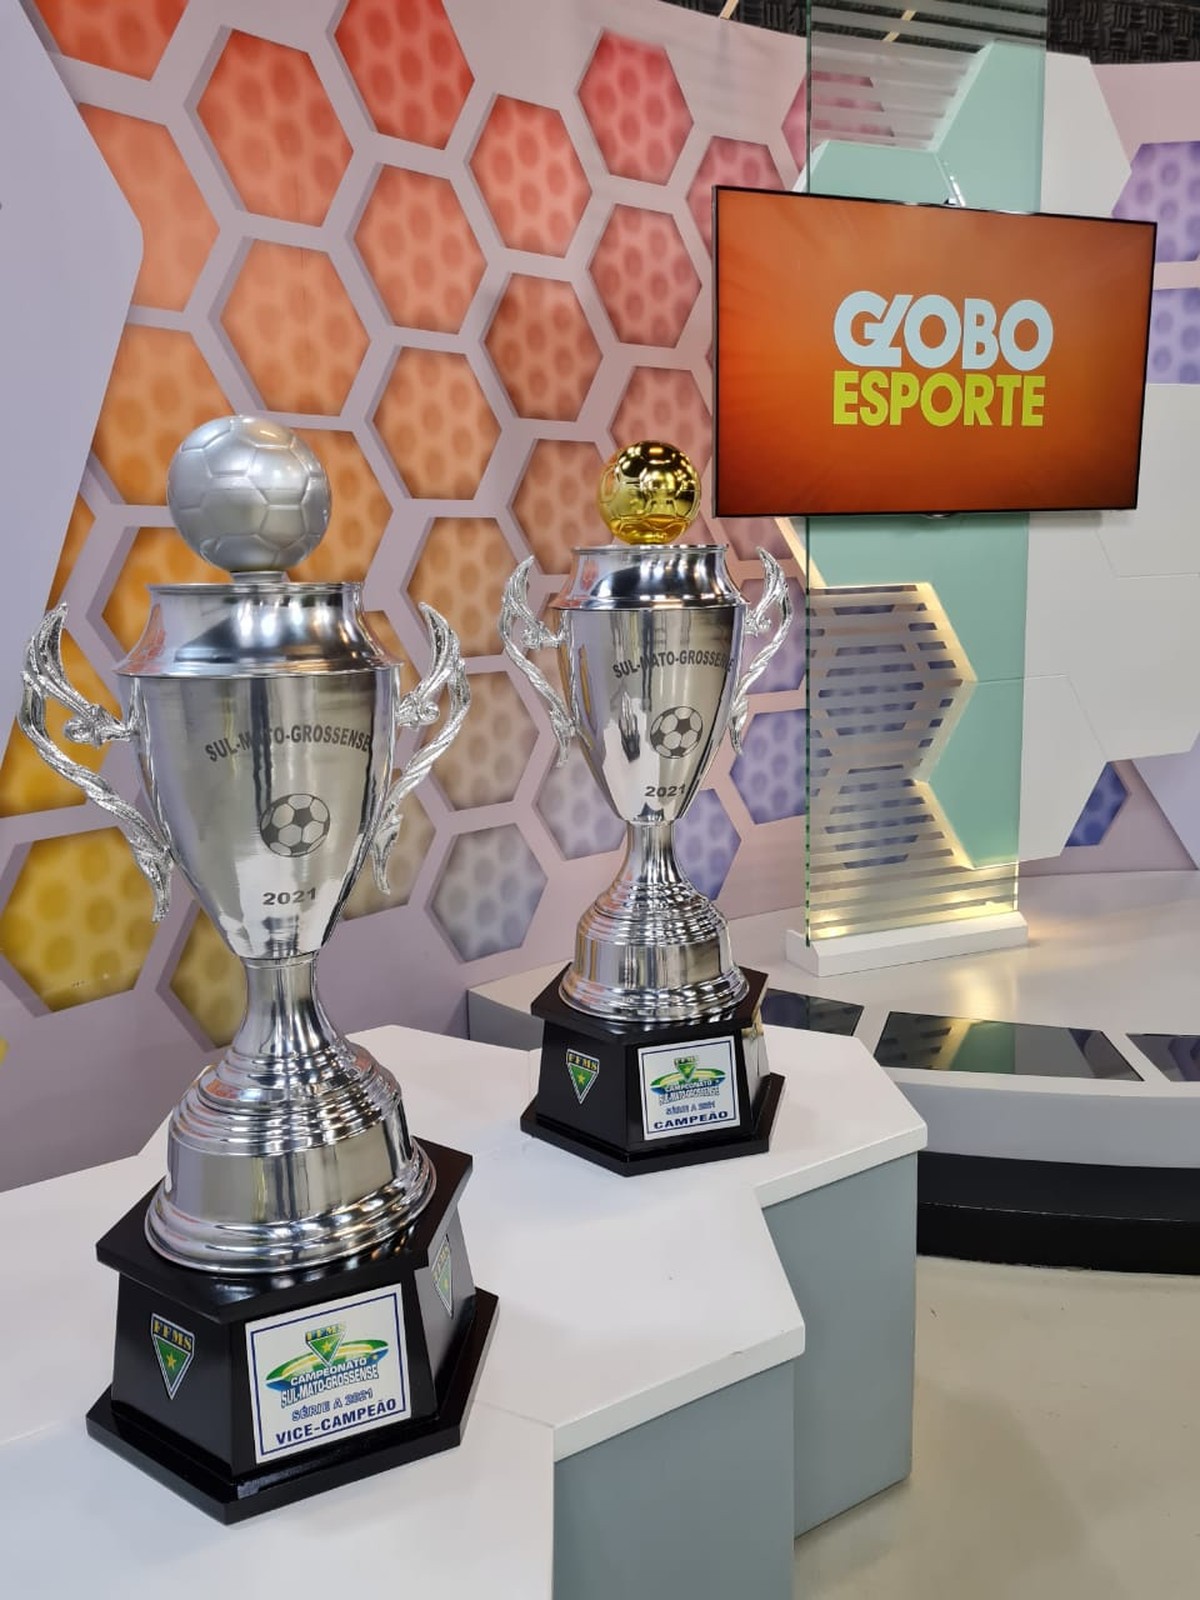 Rede Globo > tvcentroamerica - Resultado da primeira rodada do Campeonato  Mato-grossense